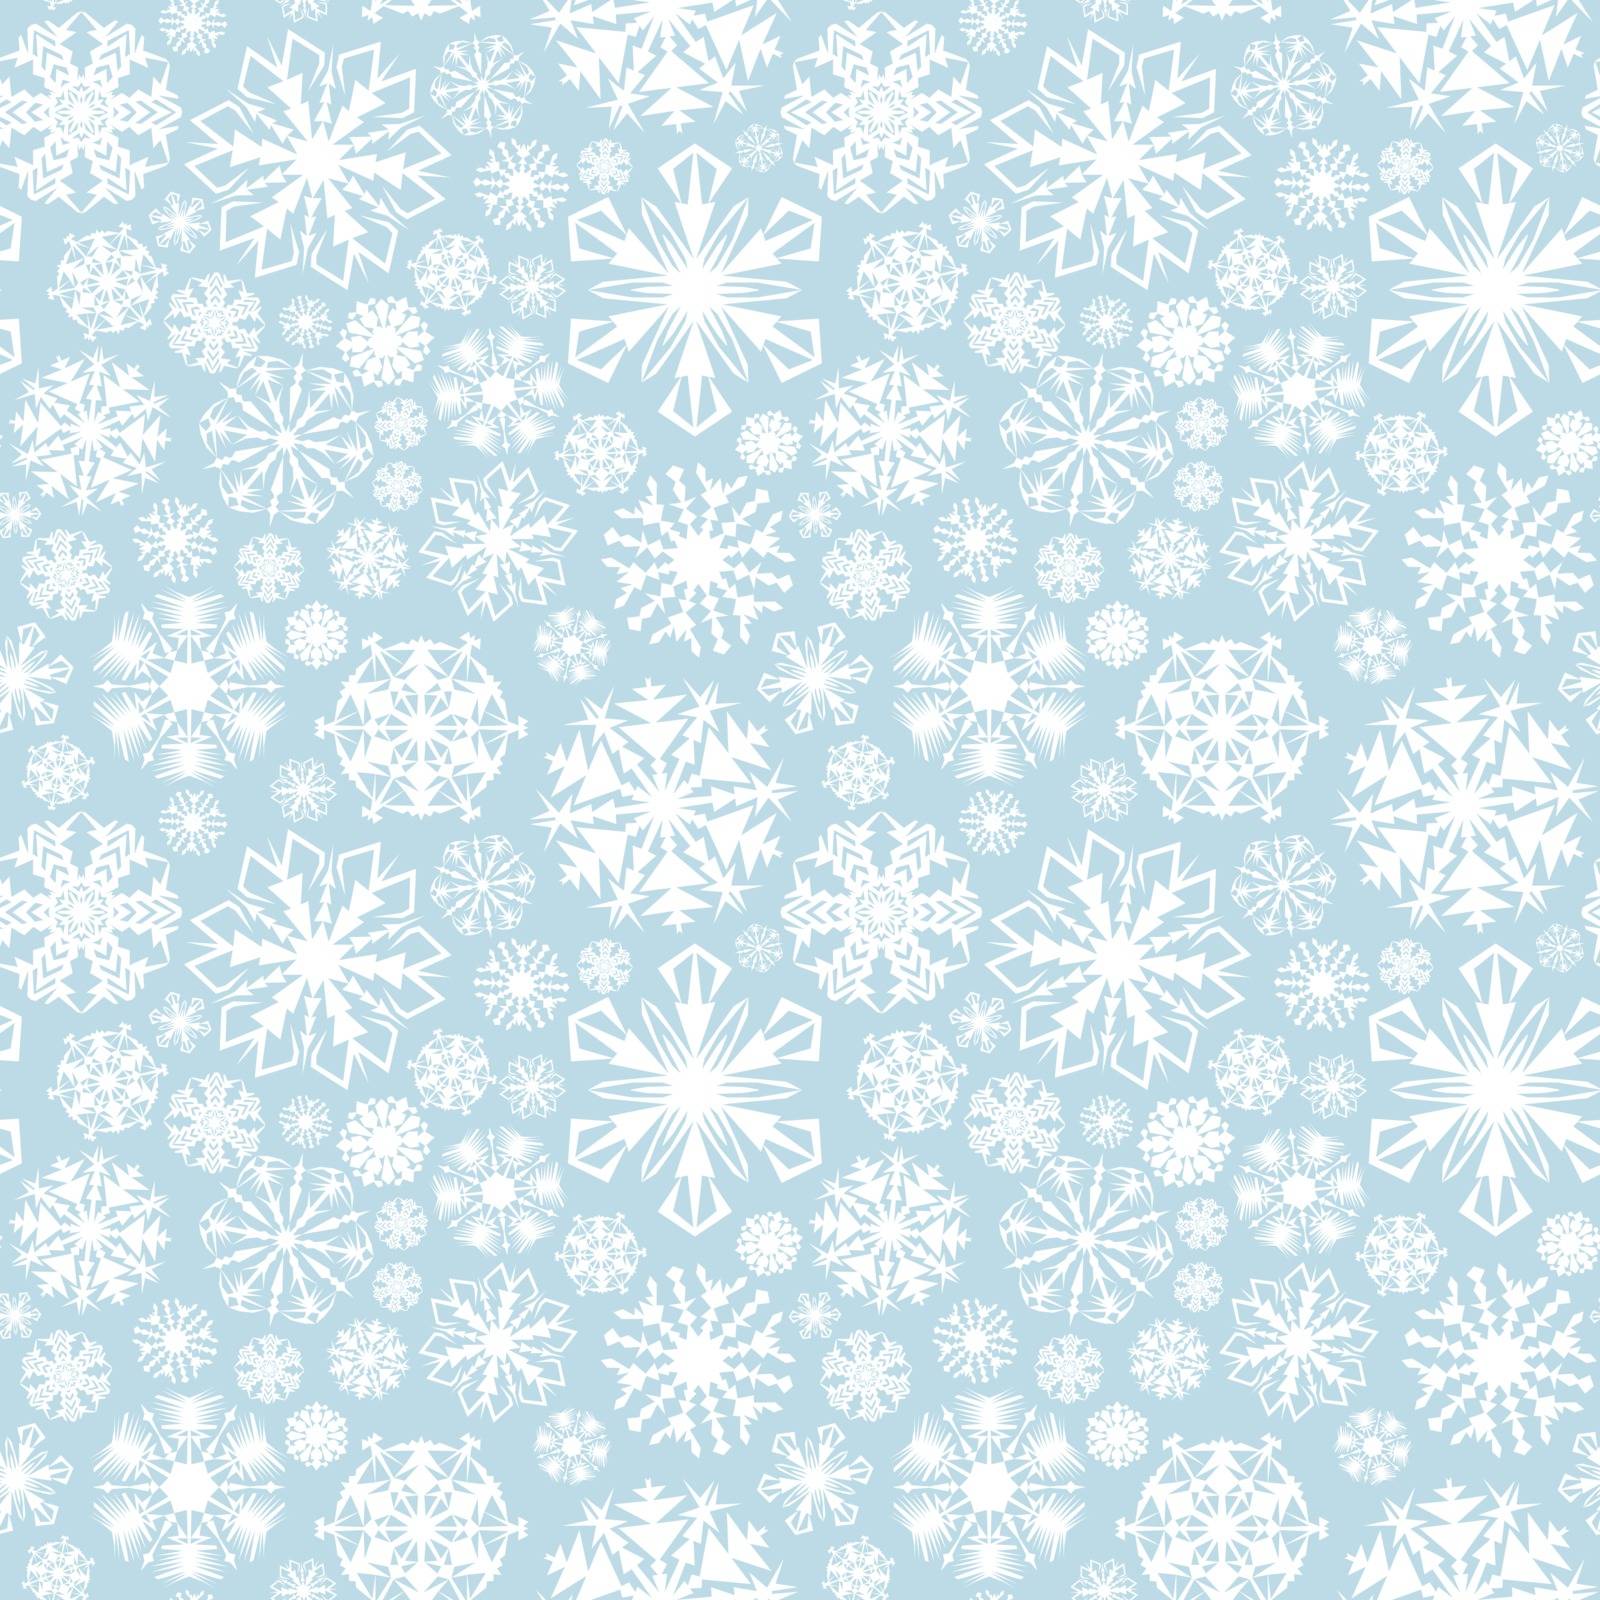 Snowflakes by nahhan